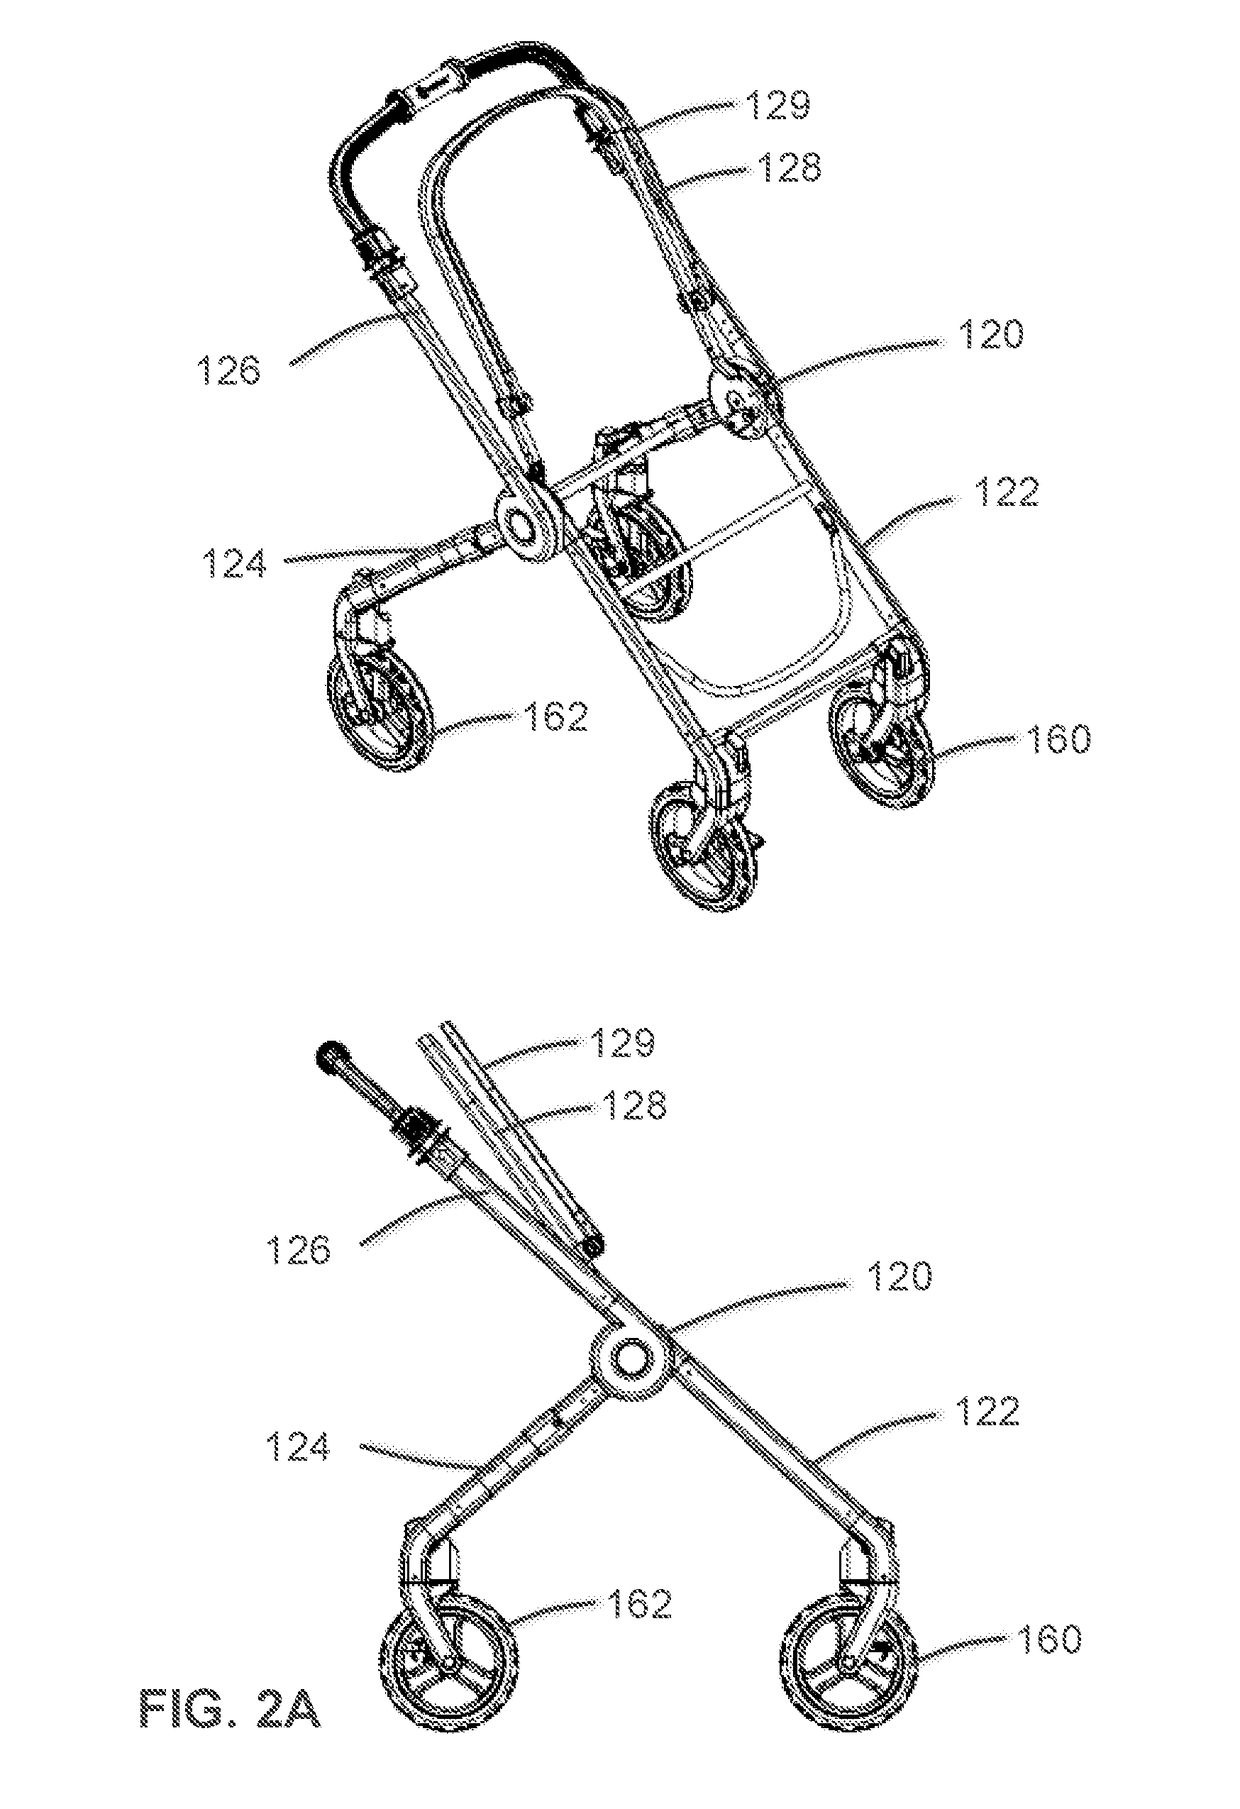 Collapsible stroller having central hub system